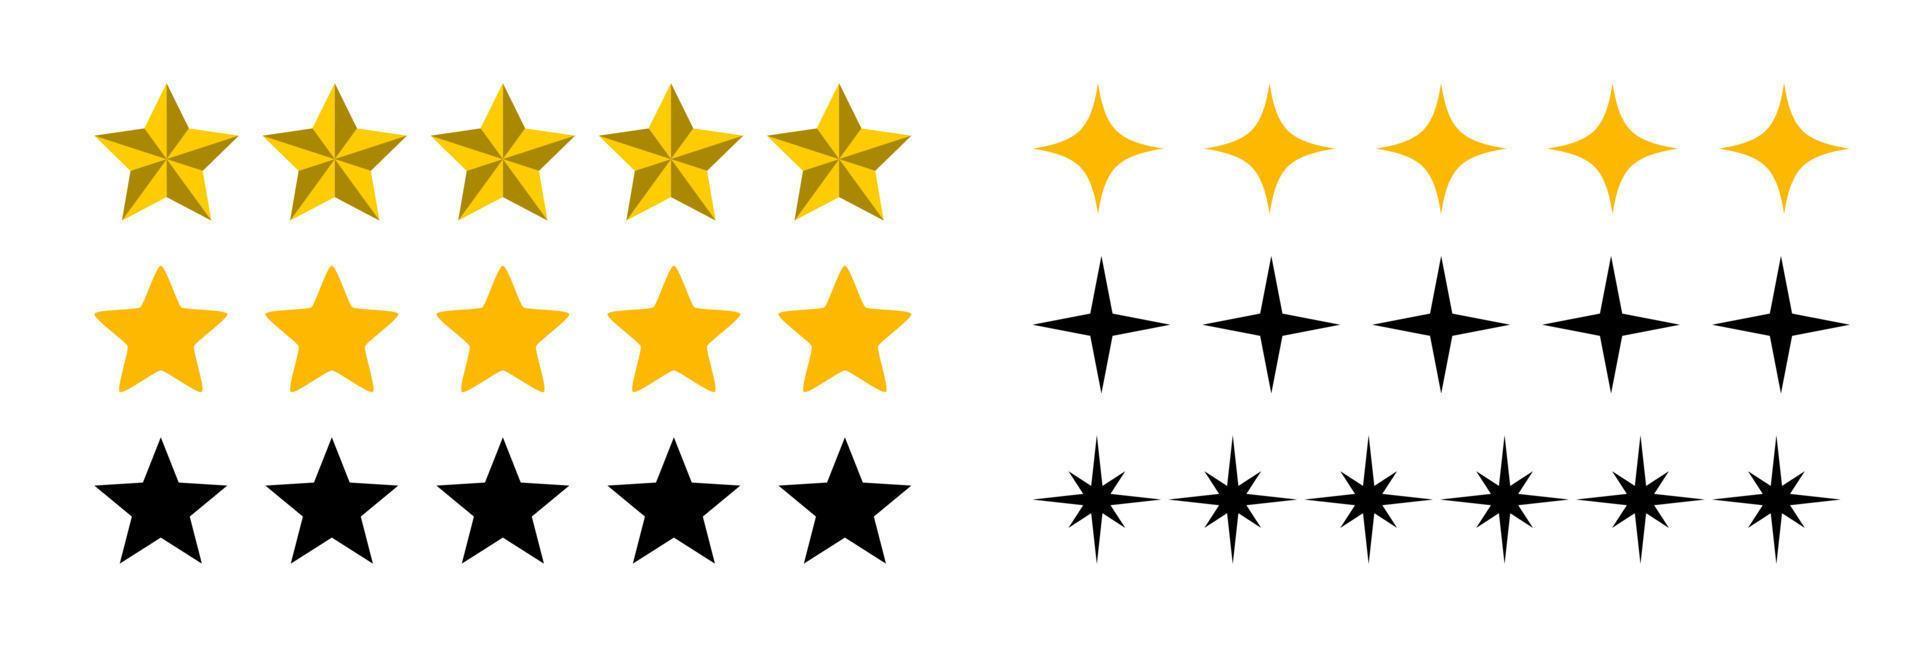 vector set of stars, varied sparkling yellow stars